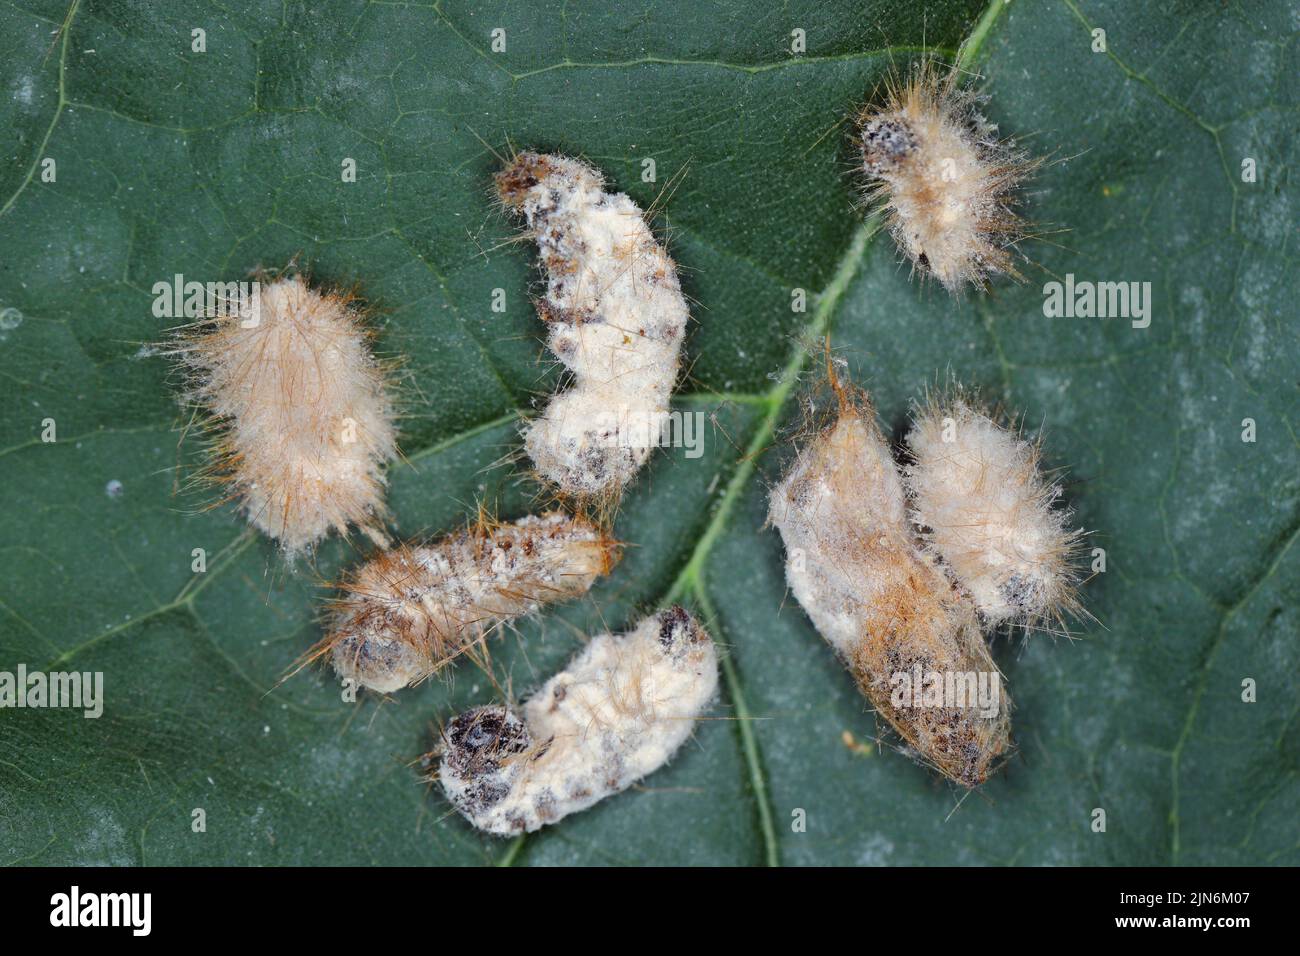 Caterpillars of Brown tail moth Euproctis chrysorrhoea killed by entomopathogenic fungus Beauveria bassiana. Stock Photo